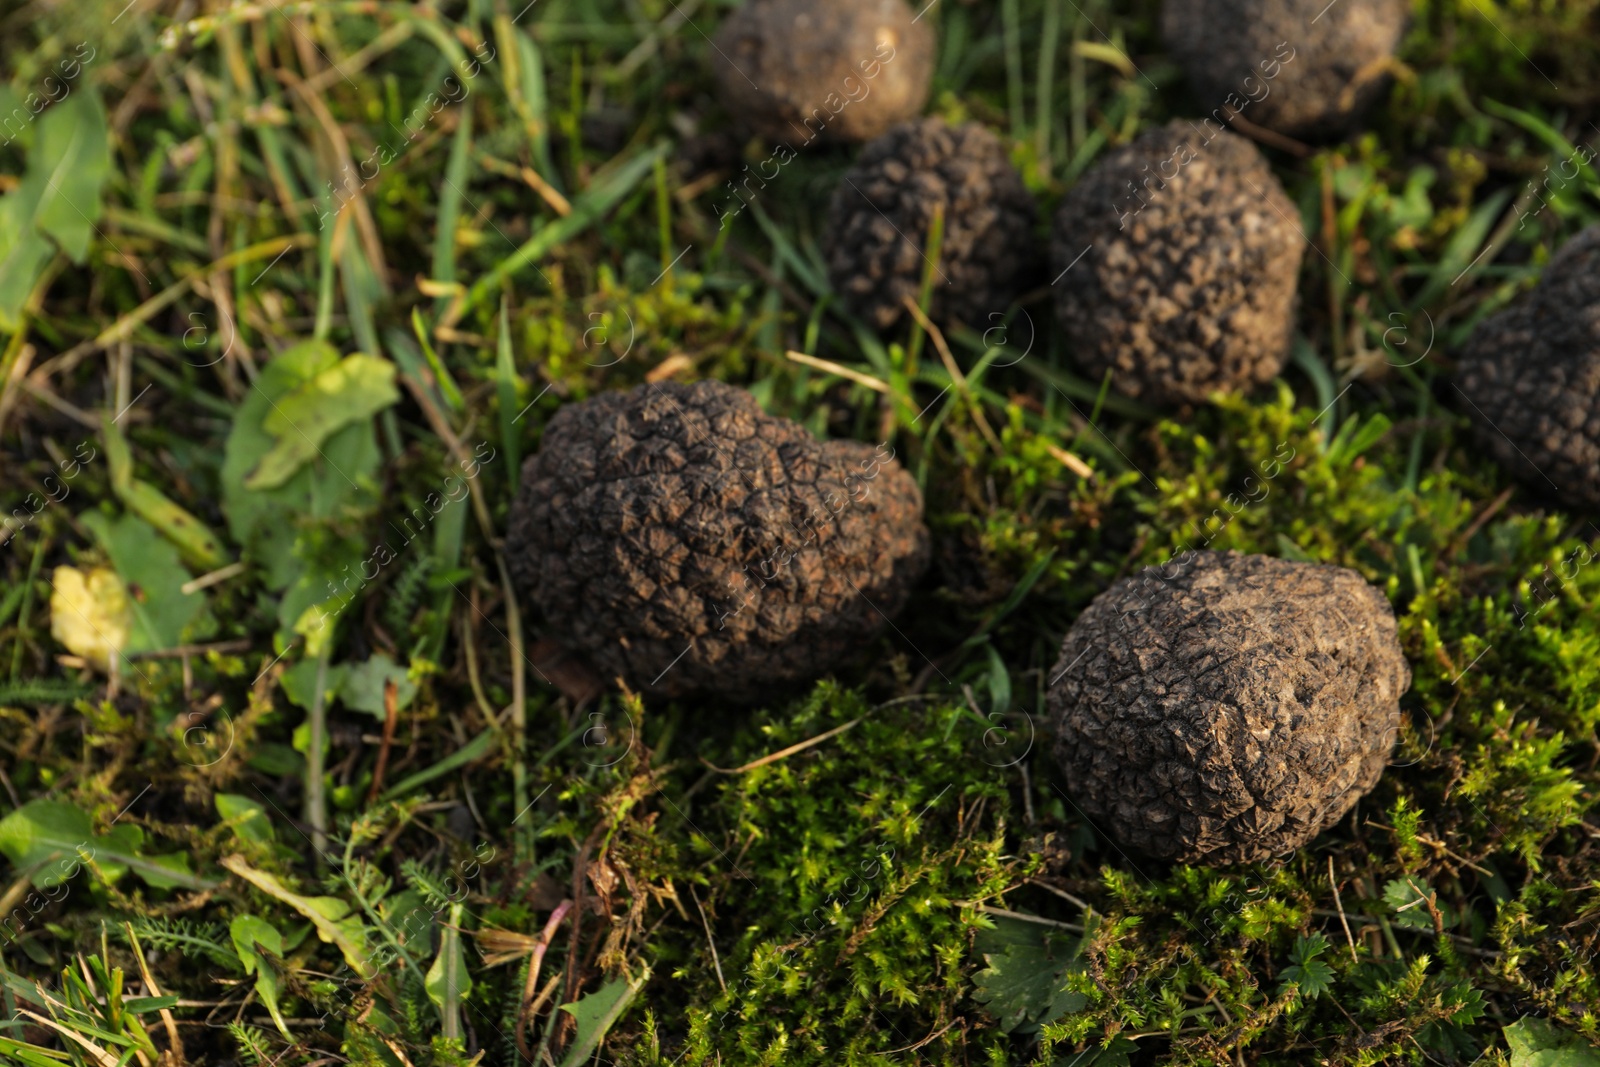 Photo of Fresh truffles on green grass, closeup view